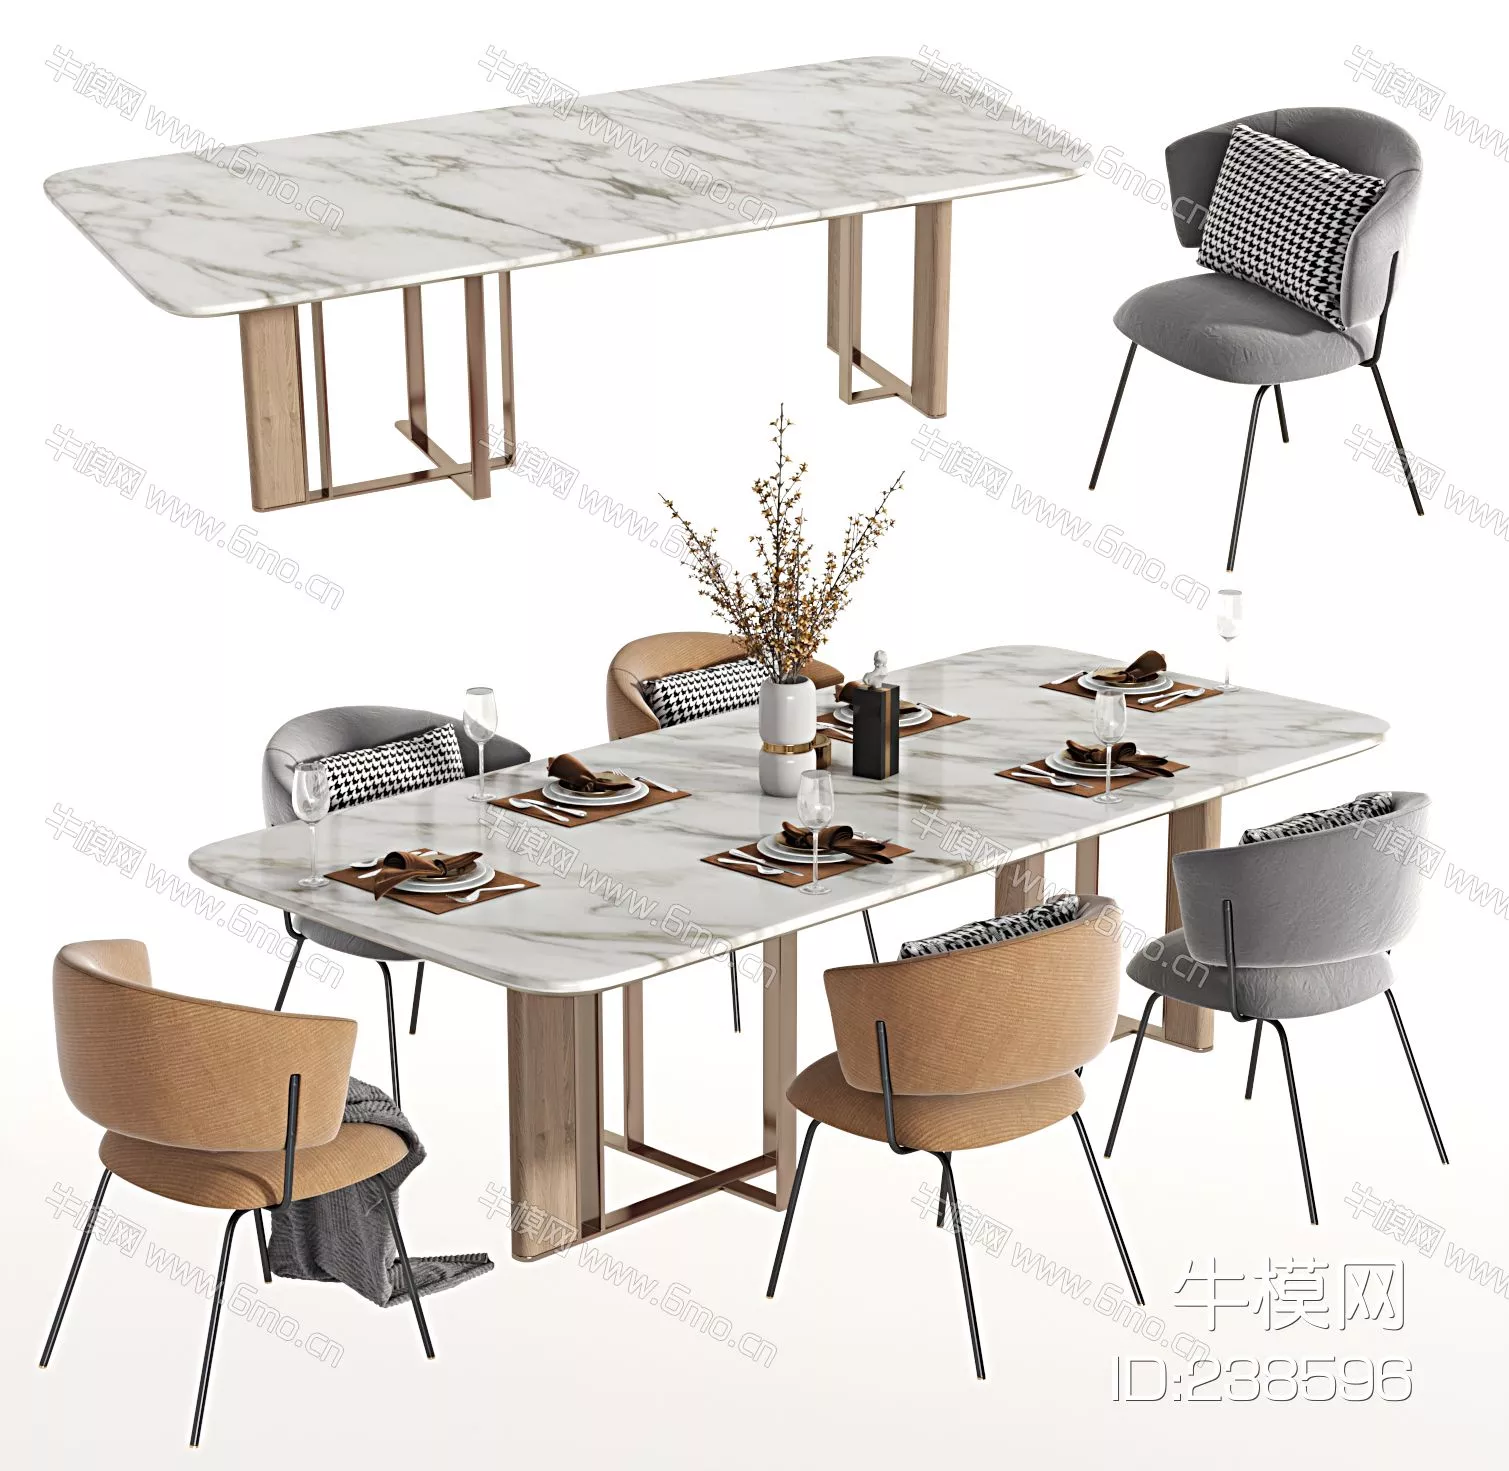 MODERN DINING TABLE SET - SKETCHUP 3D MODEL - VRAY - 238596